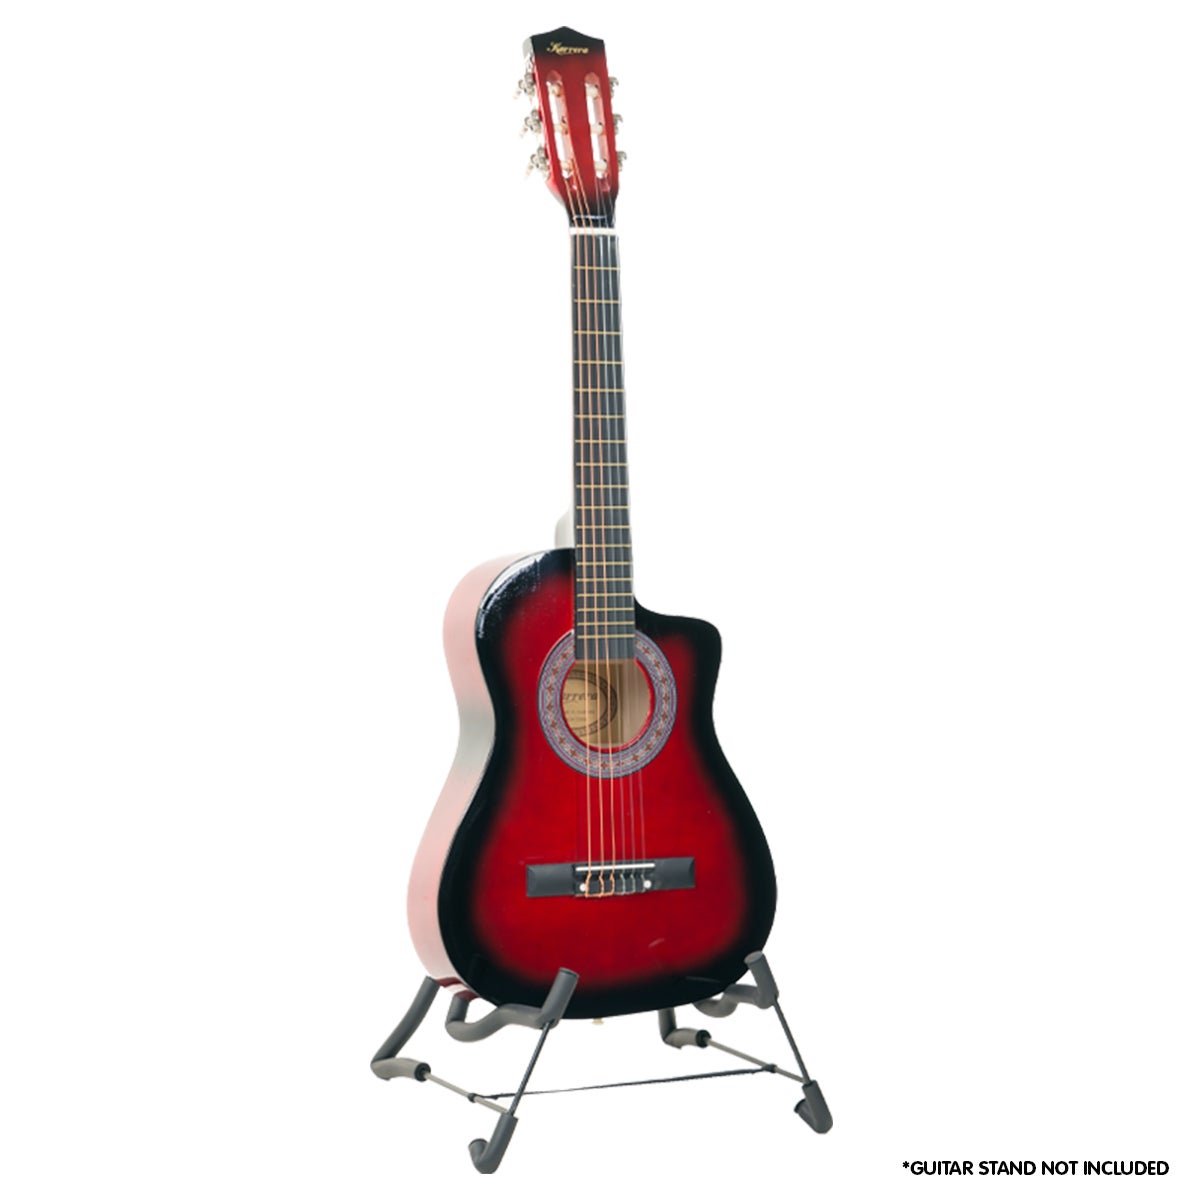 Karrera Childrens Acoustic Cutaway Wooden Guitar Ideal Kids Gift 1/2 Size